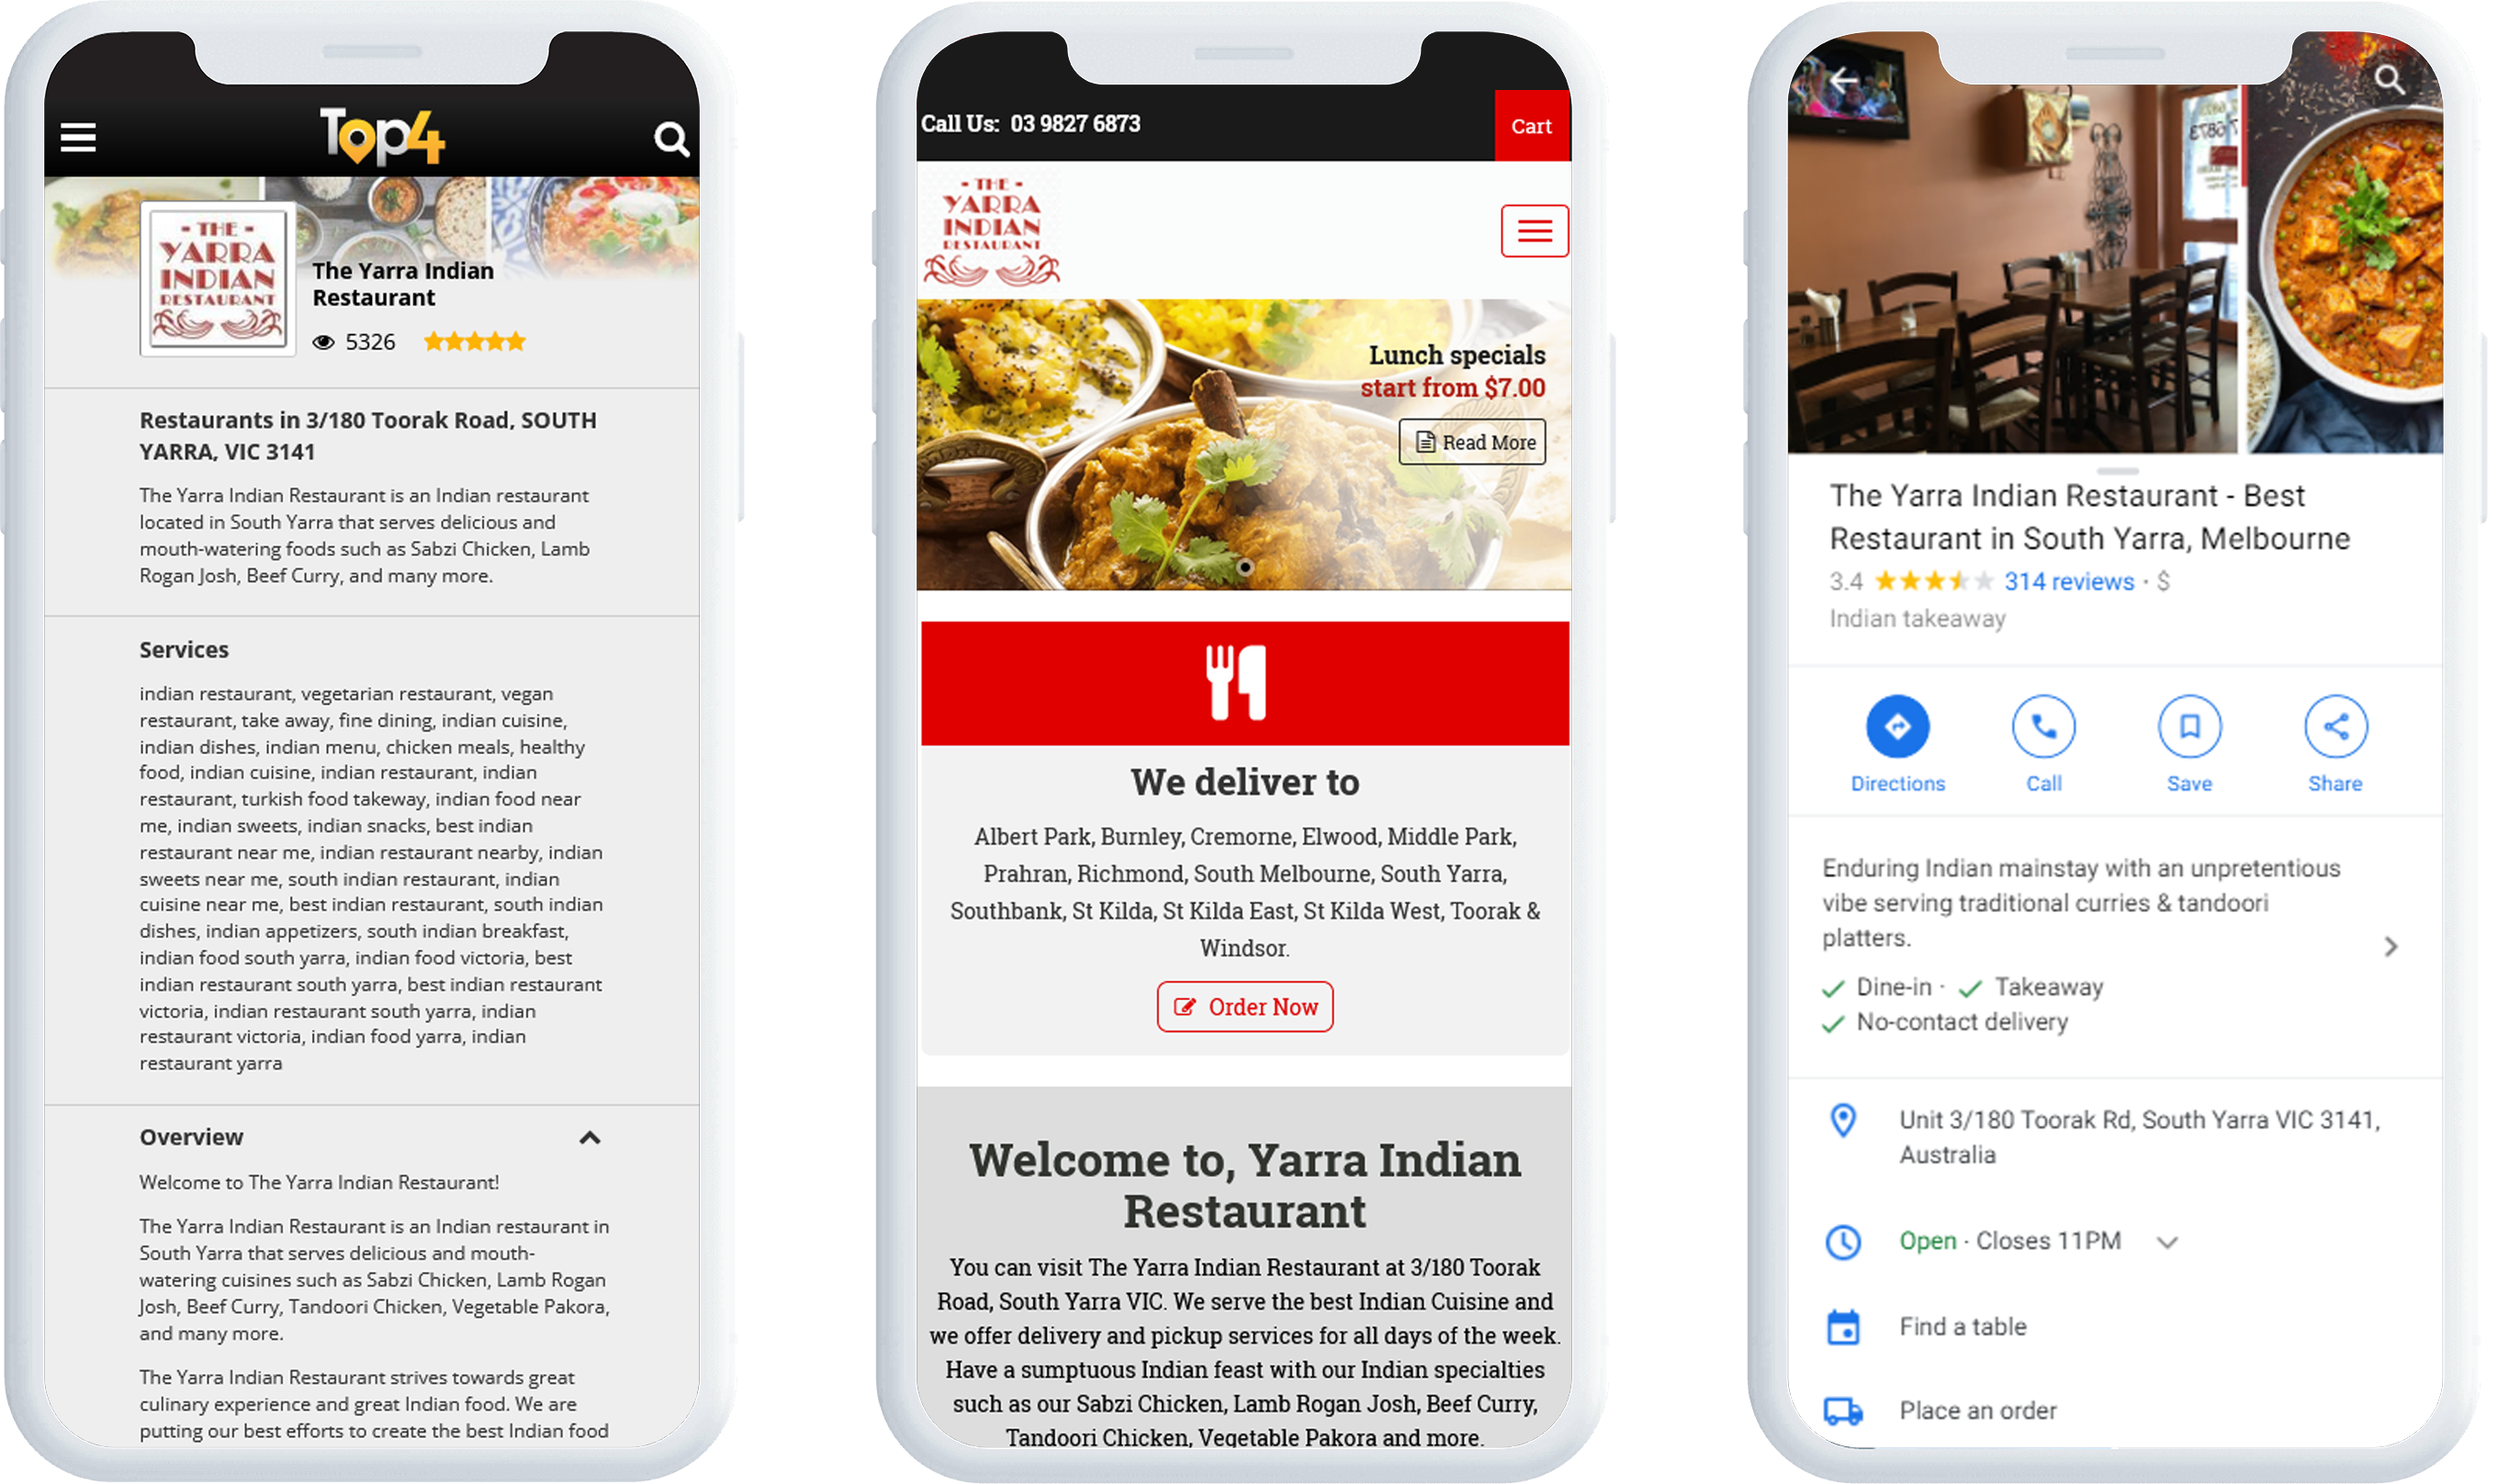 Digital Marketing for Restaurant – The Yarra Indian Restaurant